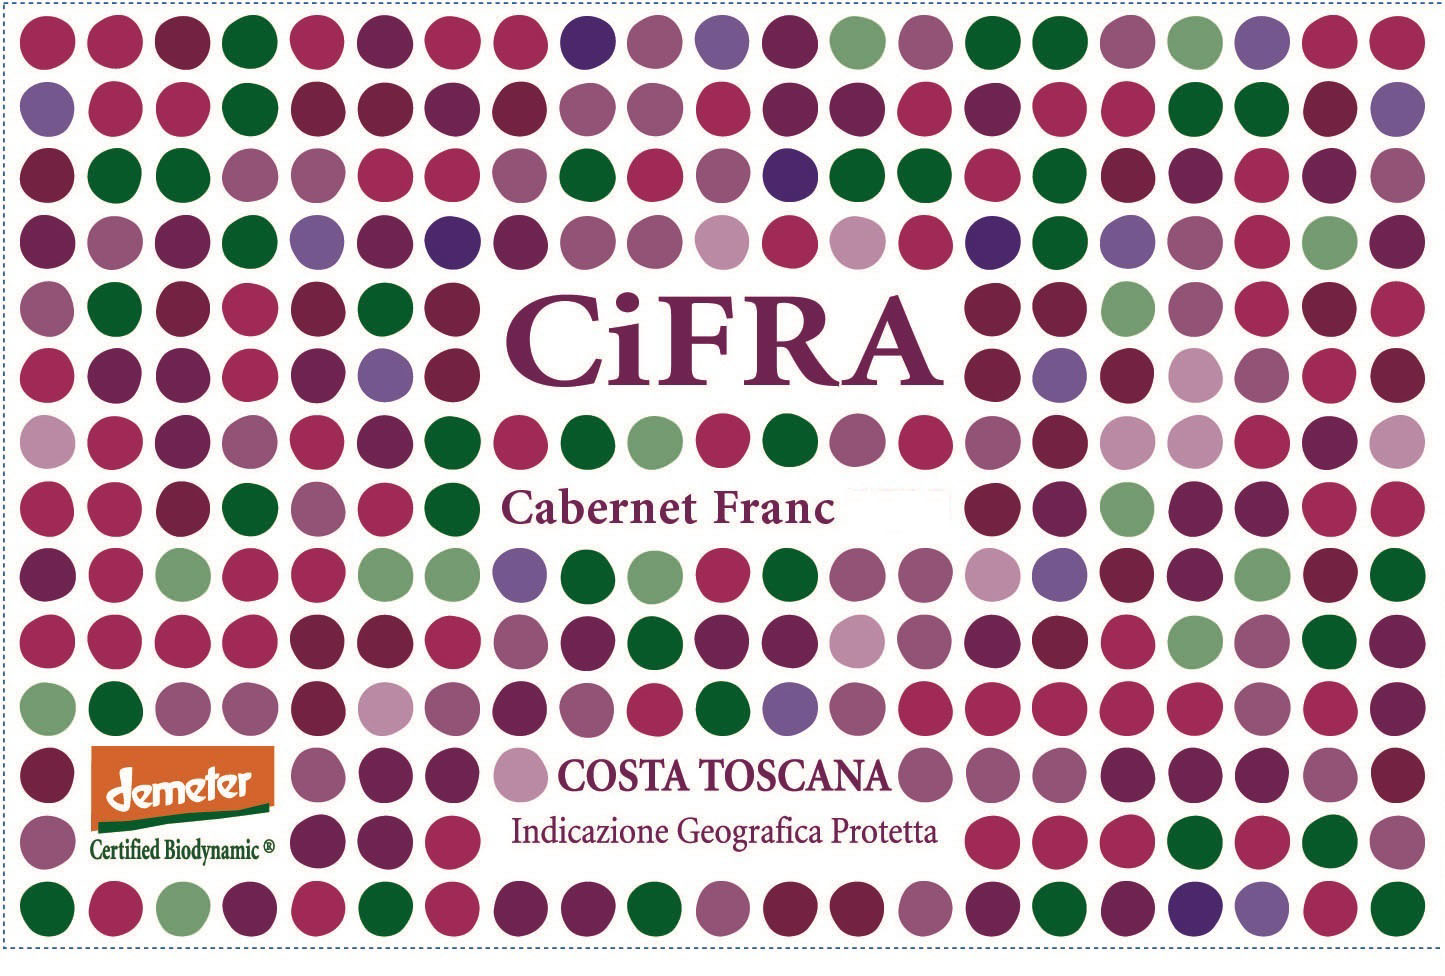 Duemani CiFra - Cabernet Franc label